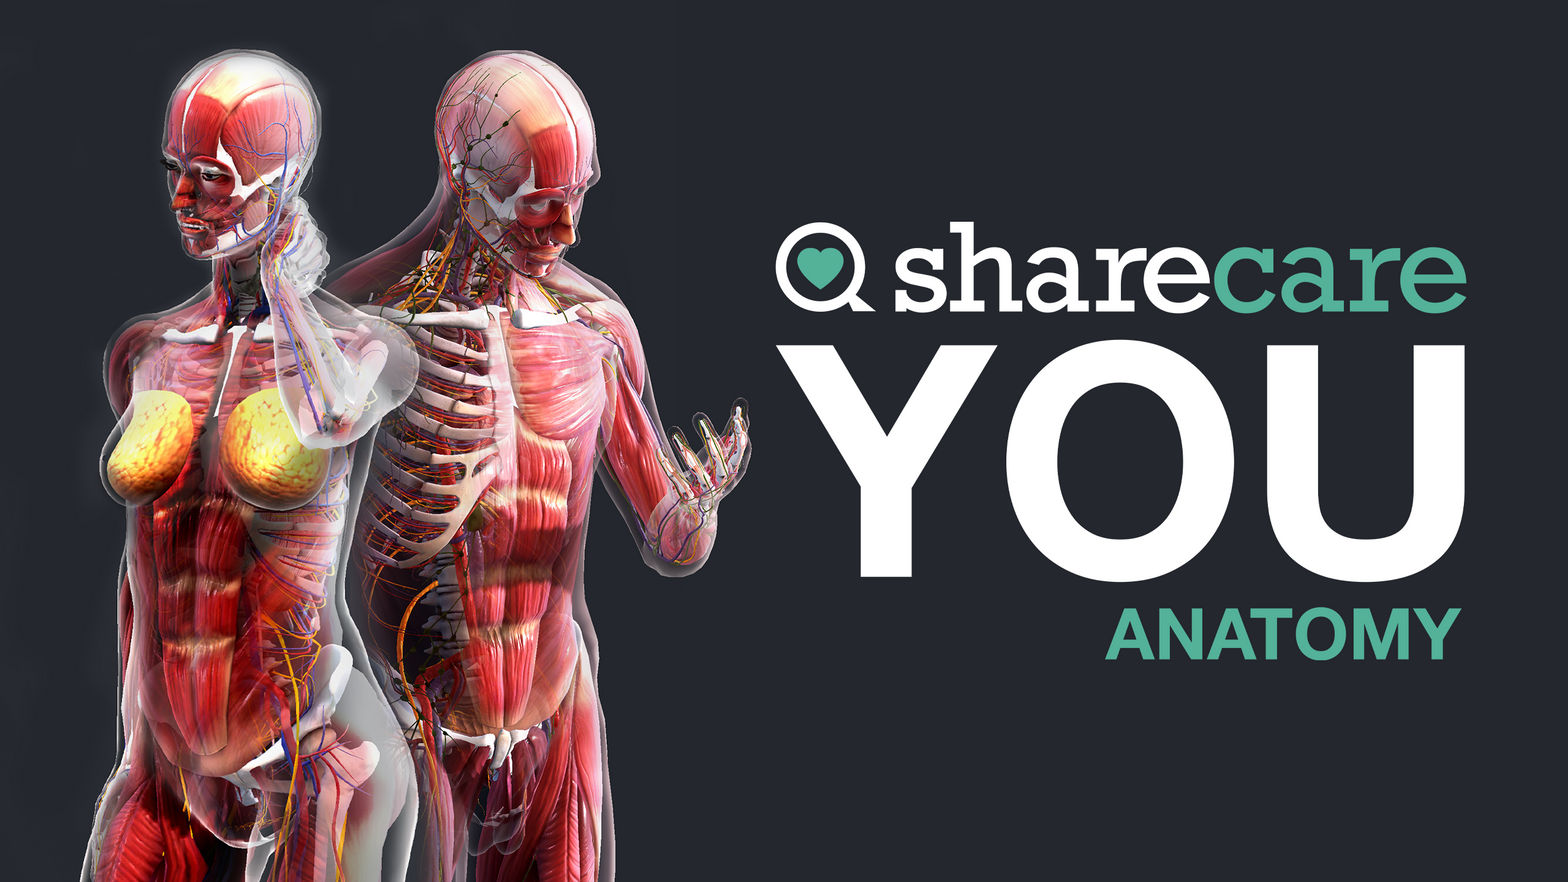 Sharecare YOU Anatomy